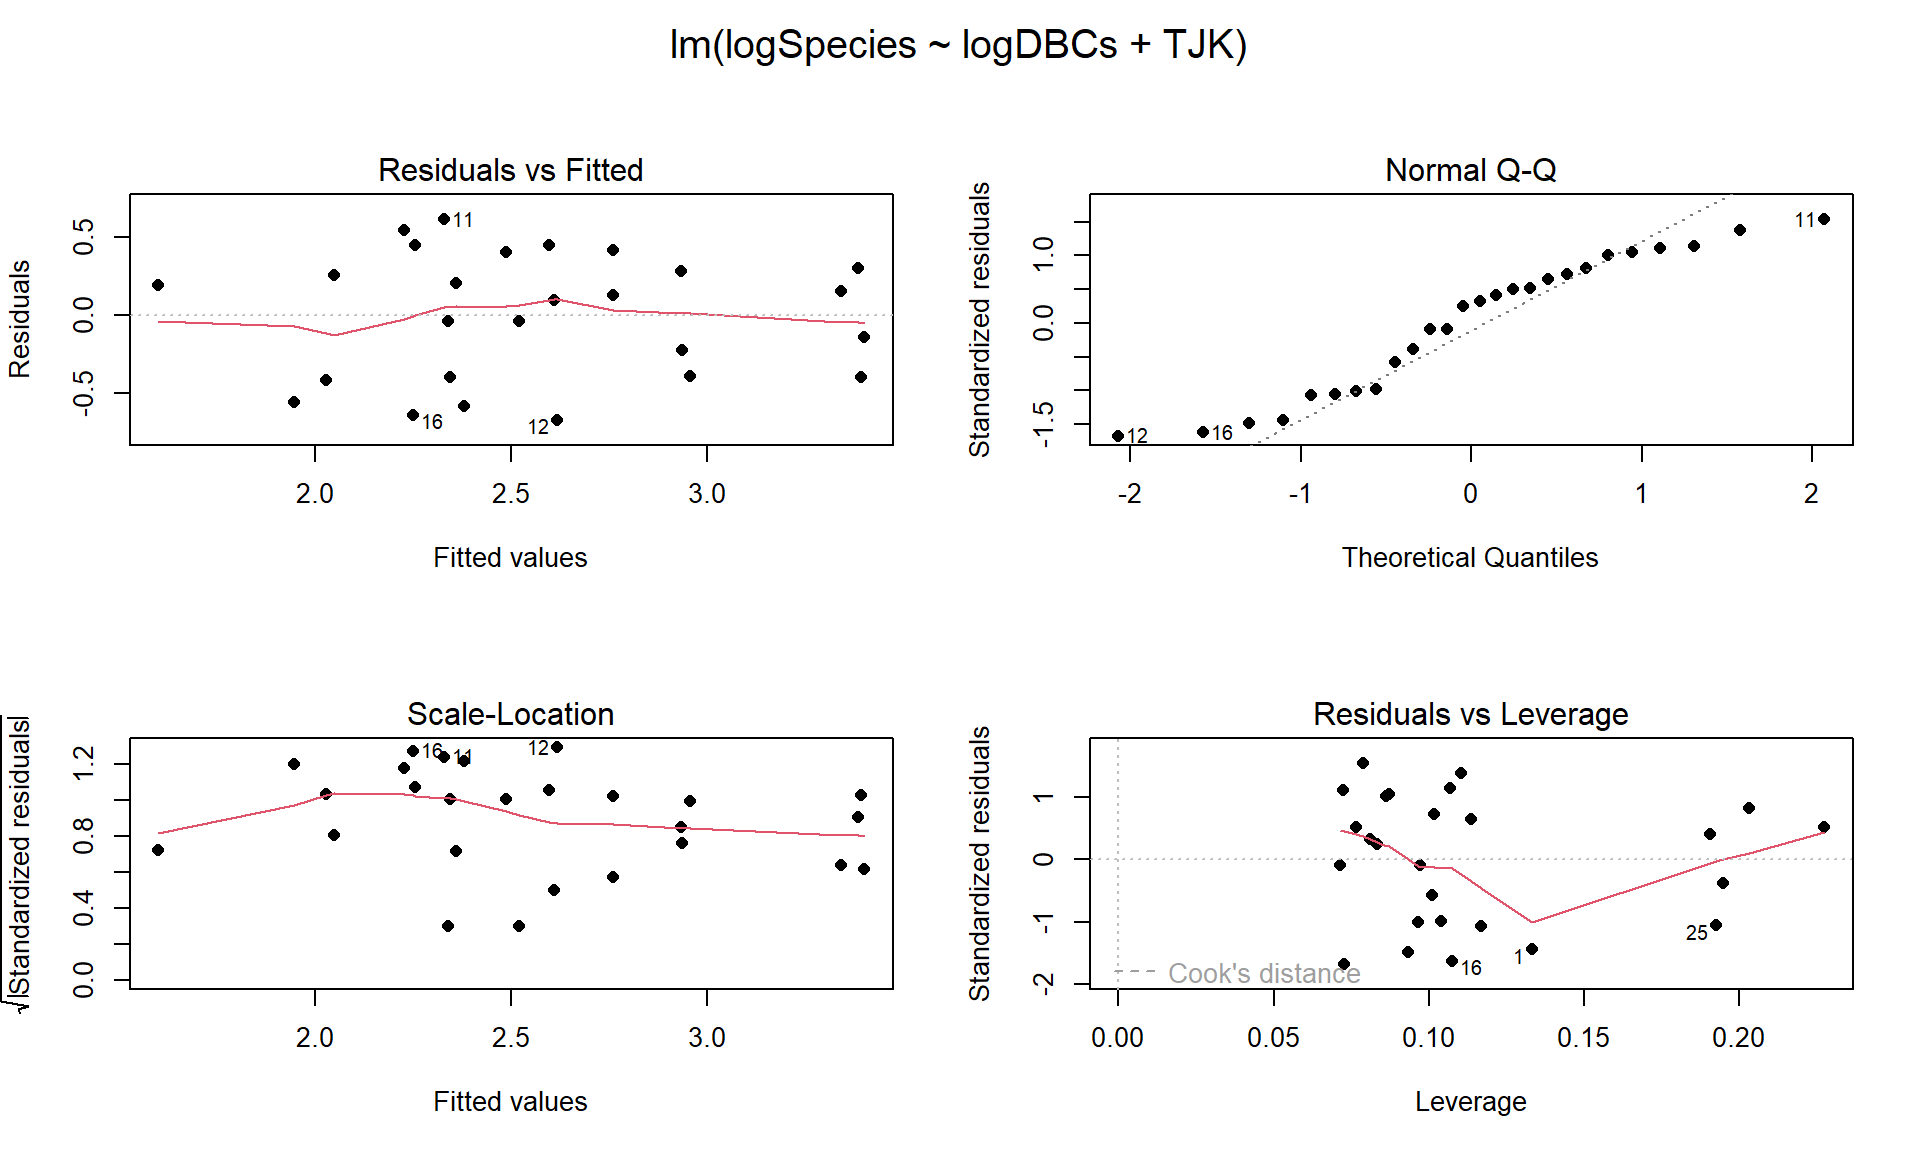 Diagnostic plots for the top AIC model.